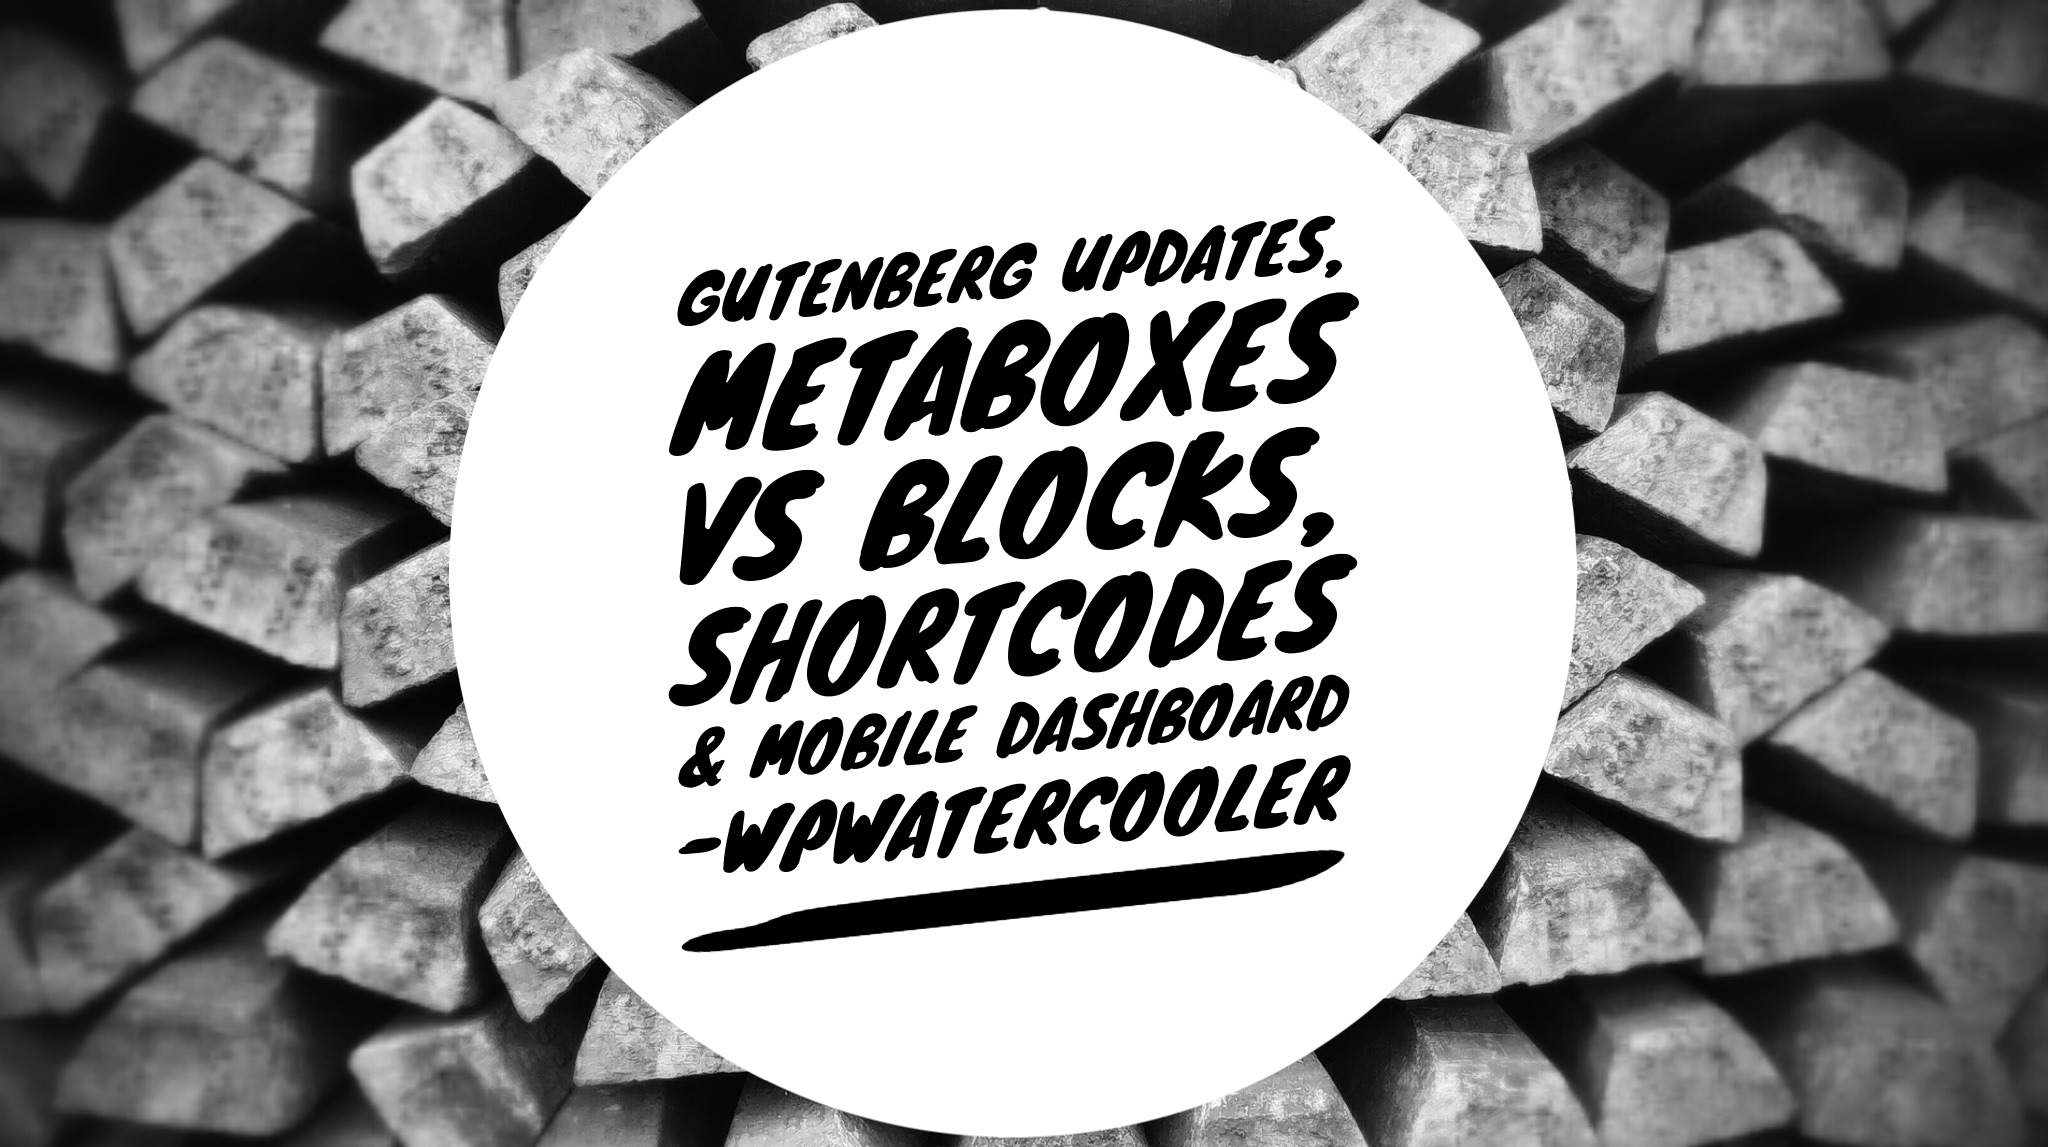 EP268 - Gutenberg Updates, Metaboxes vs Blocks, Shortcodes & Mobile Dashboard  -  WPwatercooler